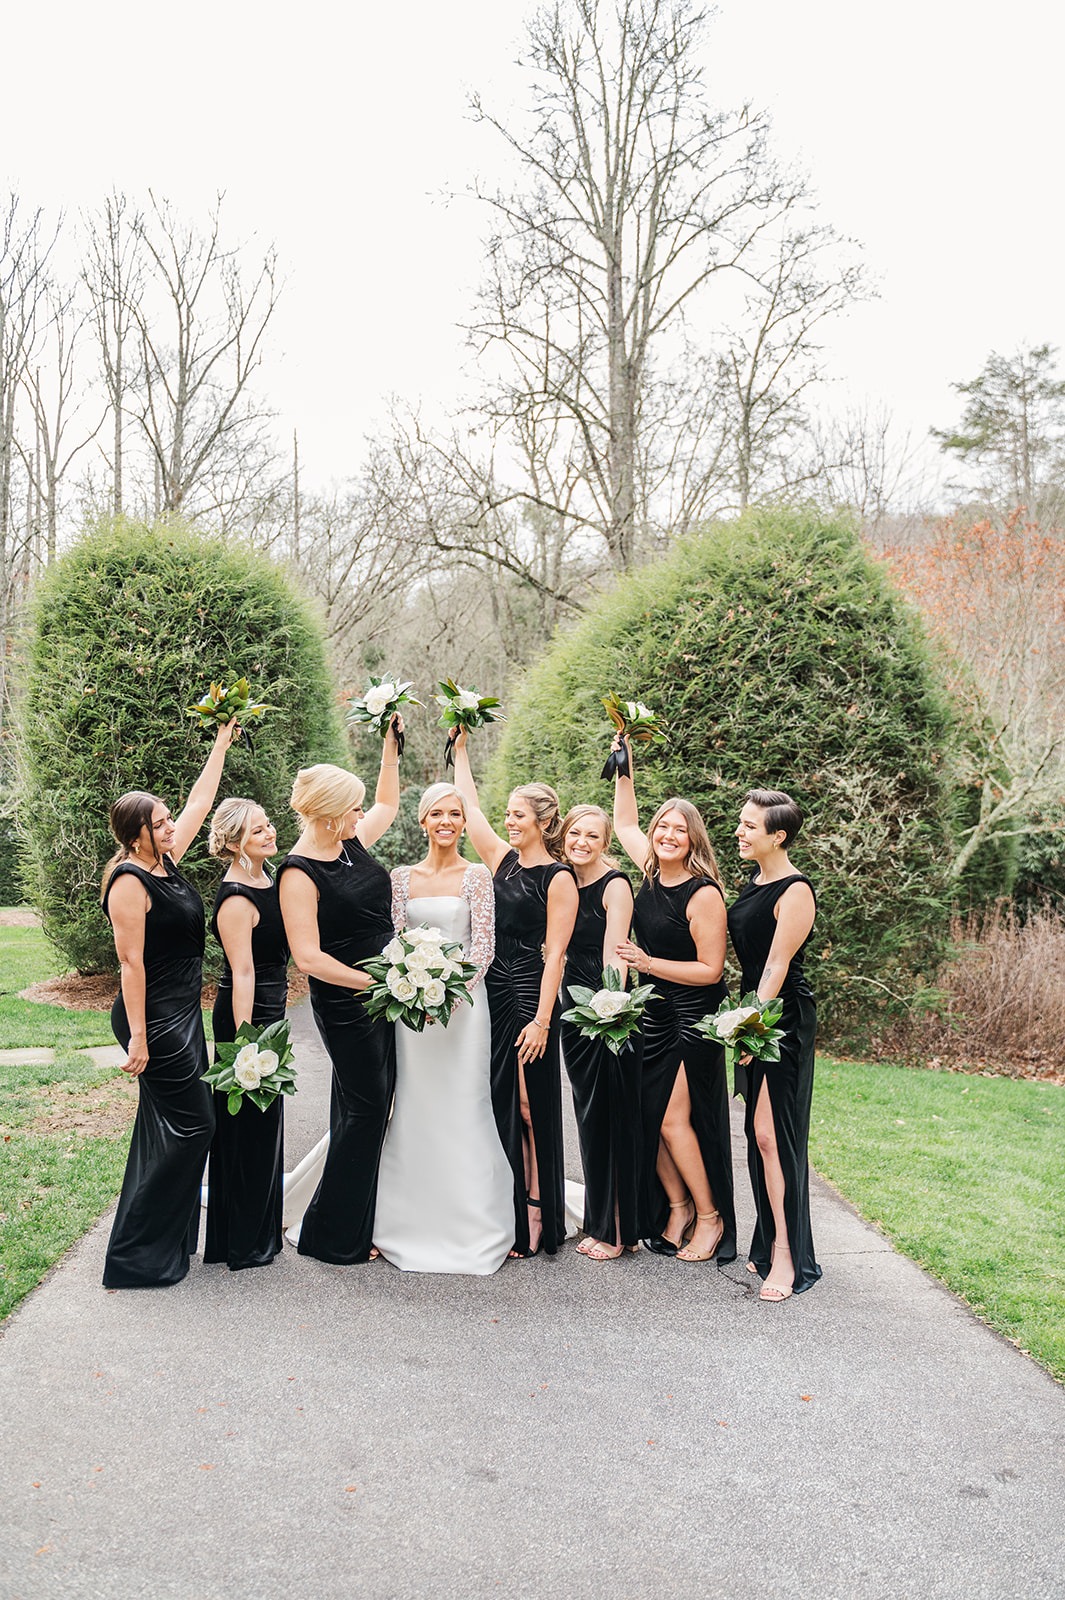 All black bridesmaids dresses 